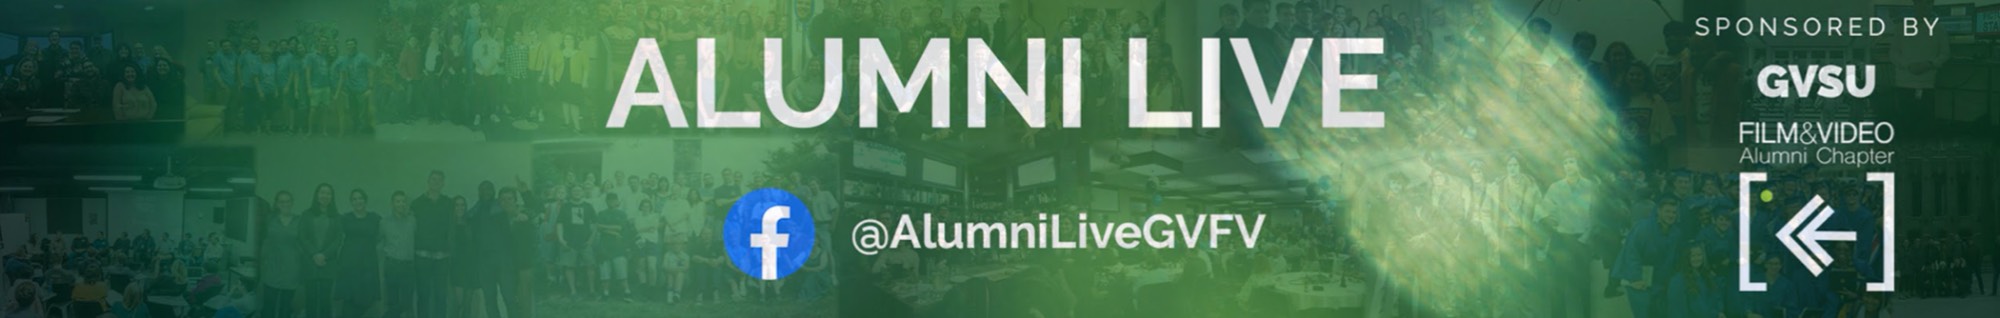 Alumni live Events logo